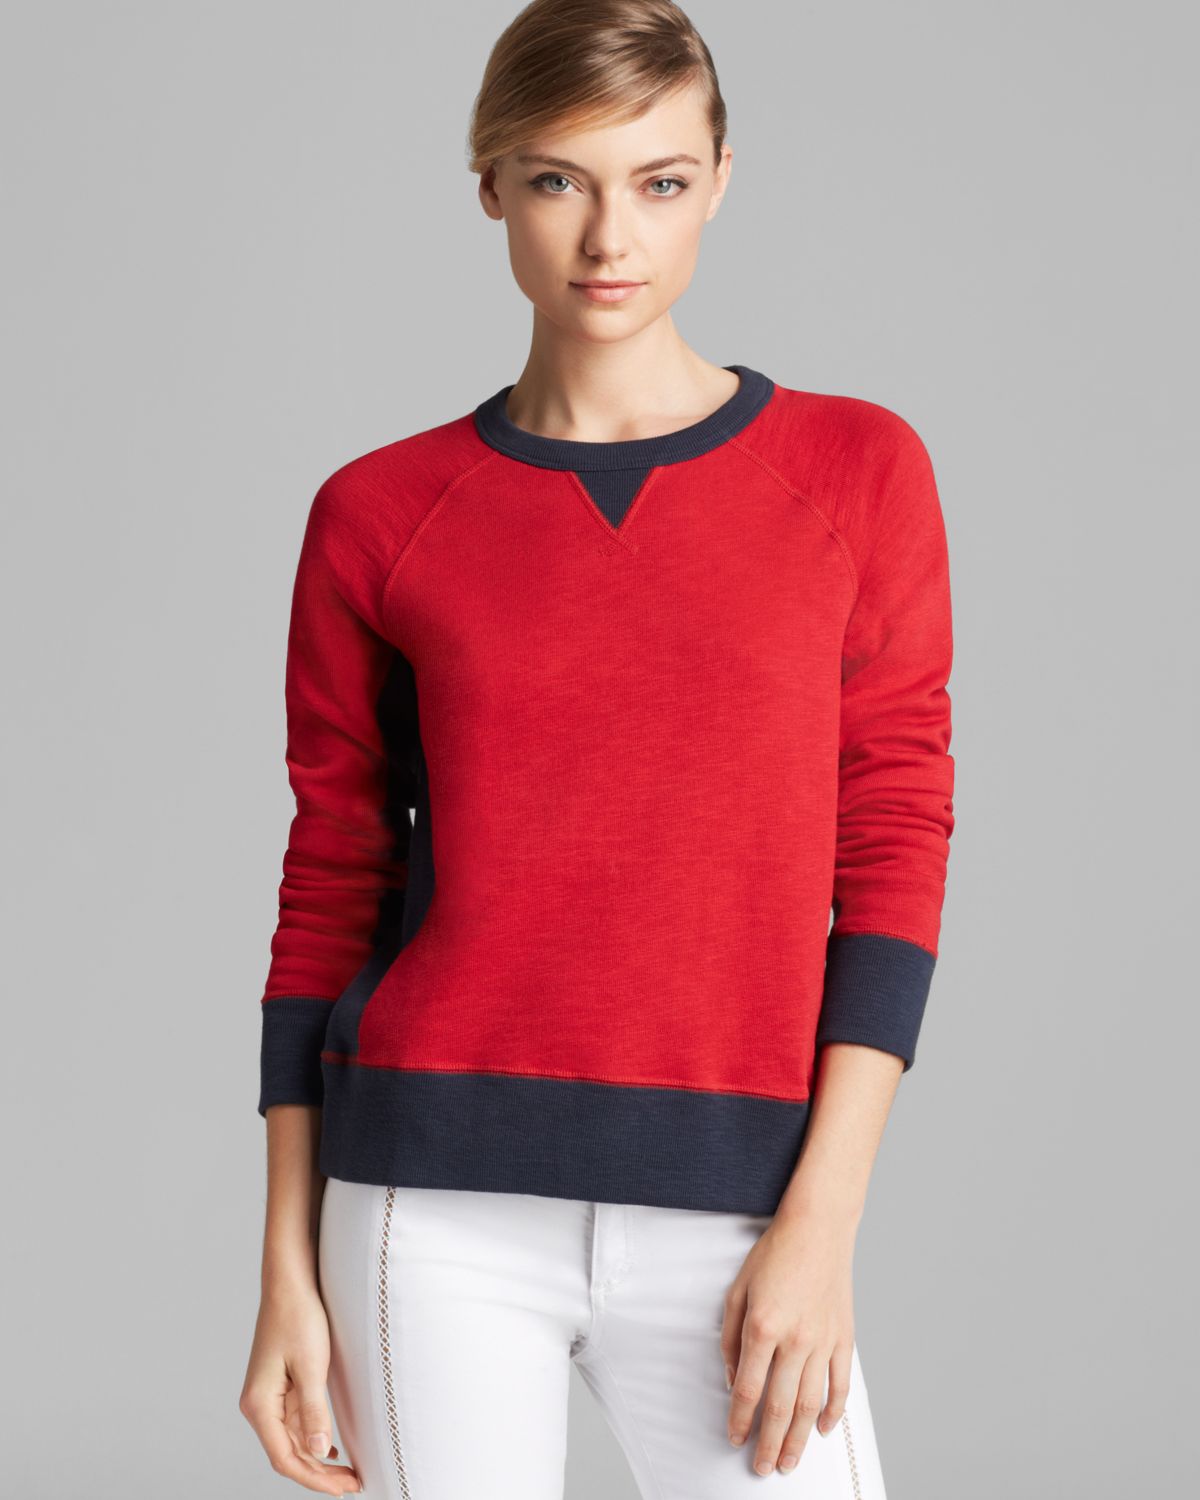 Lyst - Rag & Bone Sweatshirt The Basic Raglan French Terry in Red